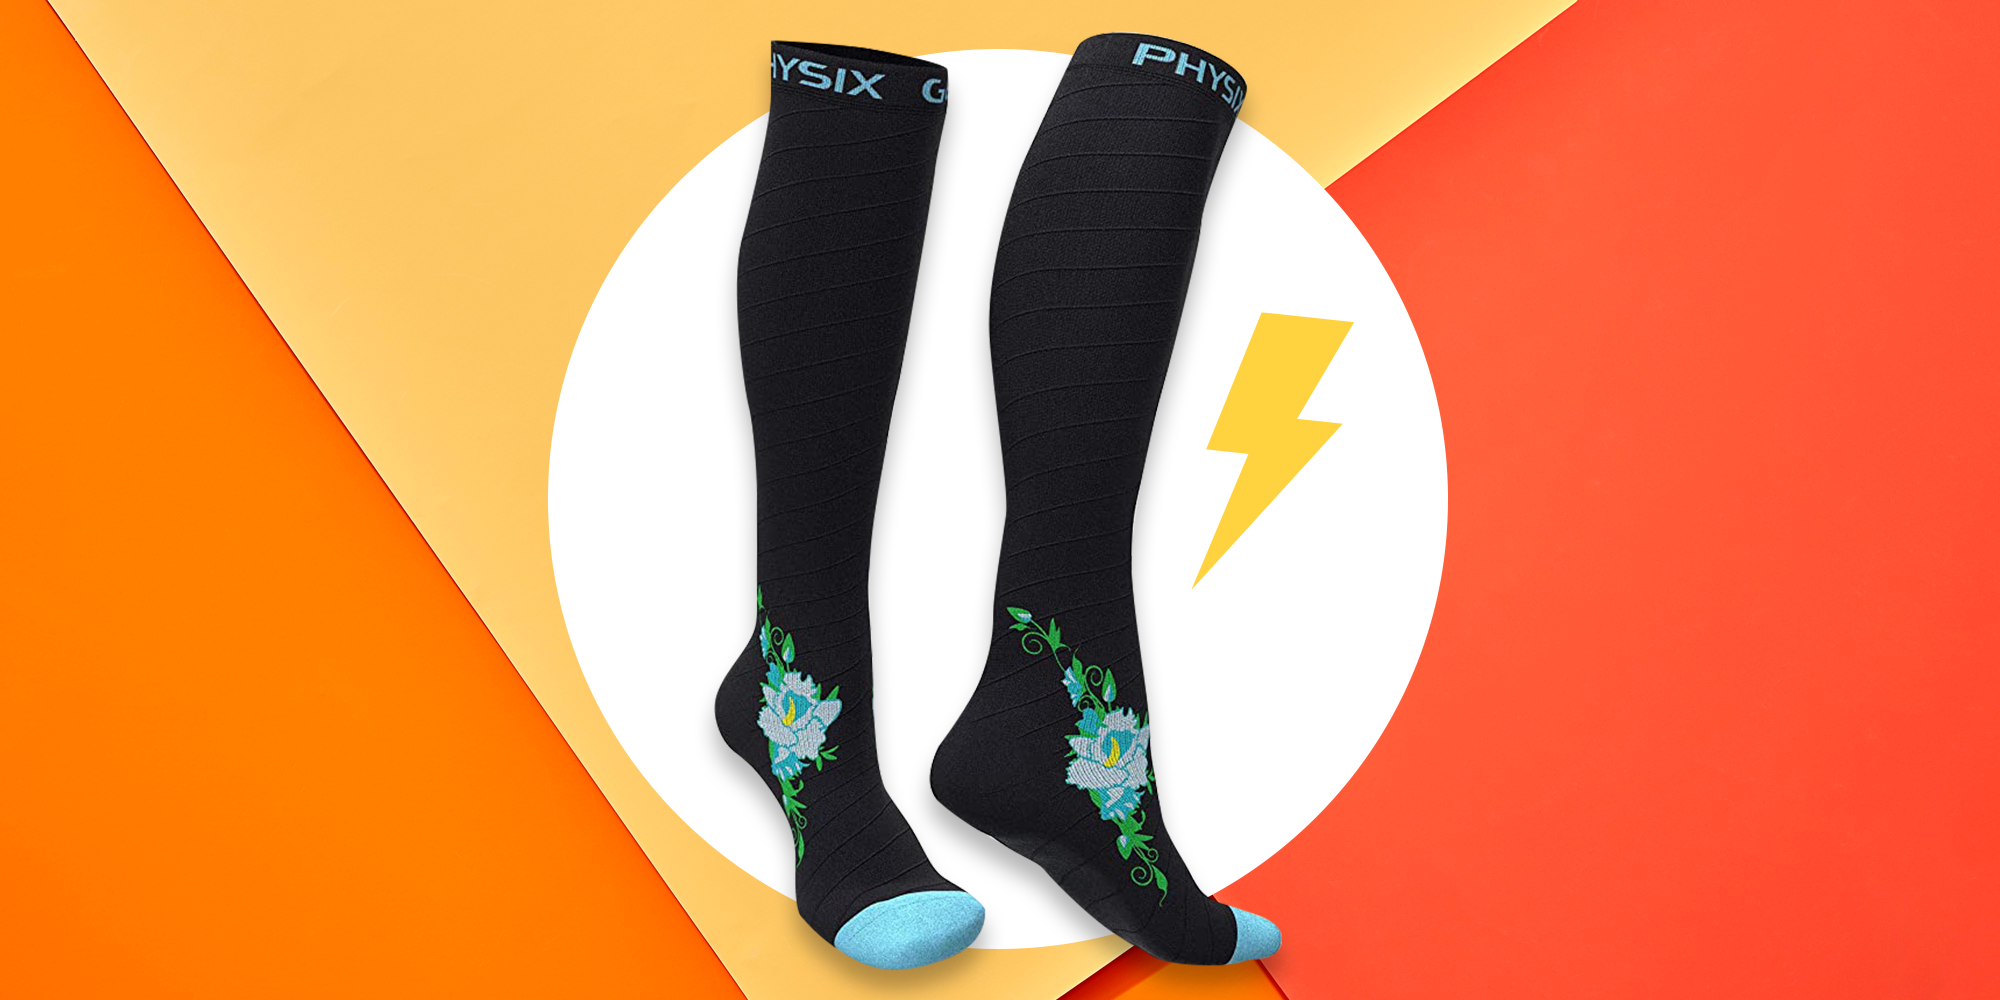 Compression Socks for Women and Men-Best Medical,for Running,Nursing,Circulation & Recovery Hiking Travel & Flight Socks-20-25mmHg 